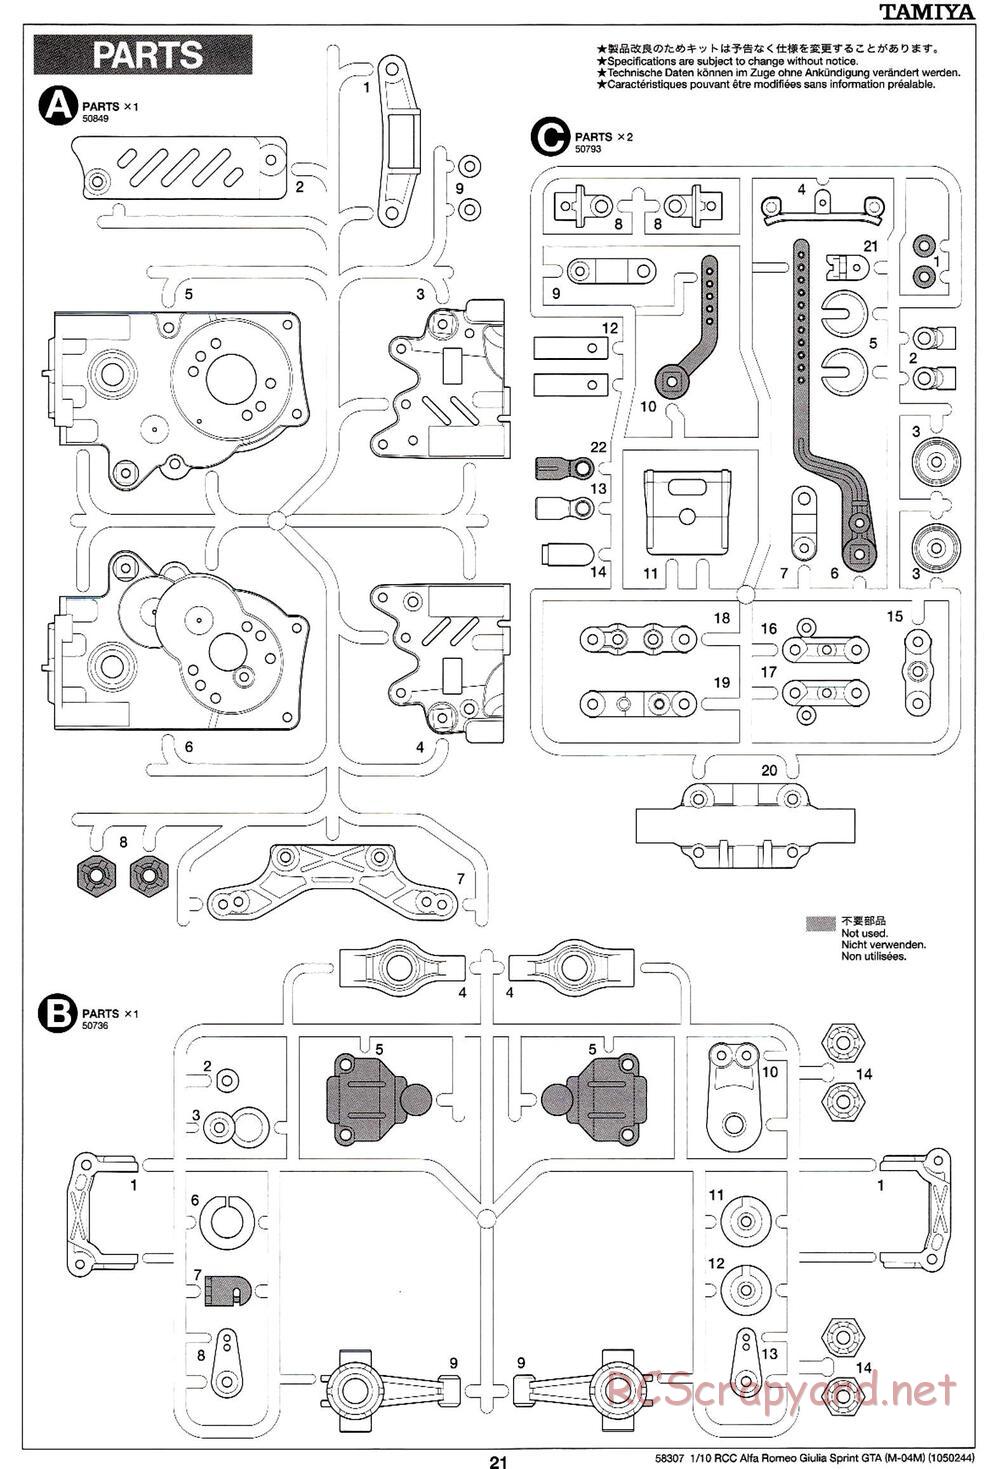 Tamiya - Alfa Romeo Giulia Sprint GTA - M04M Chassis - Manual - Page 21